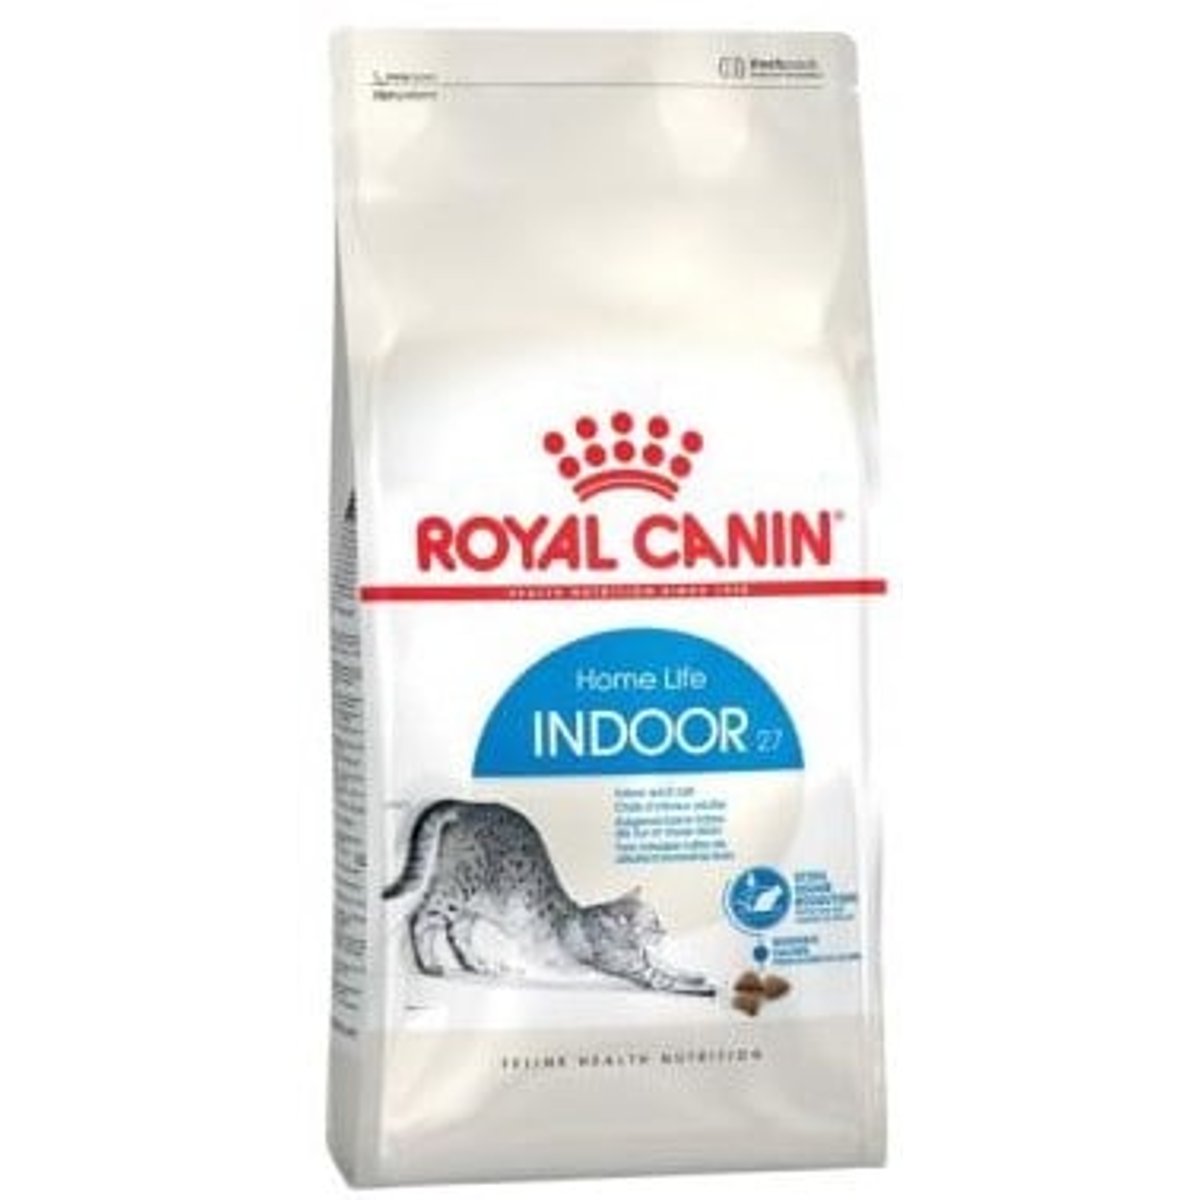 Royal Canin Indoor granule pro kočky